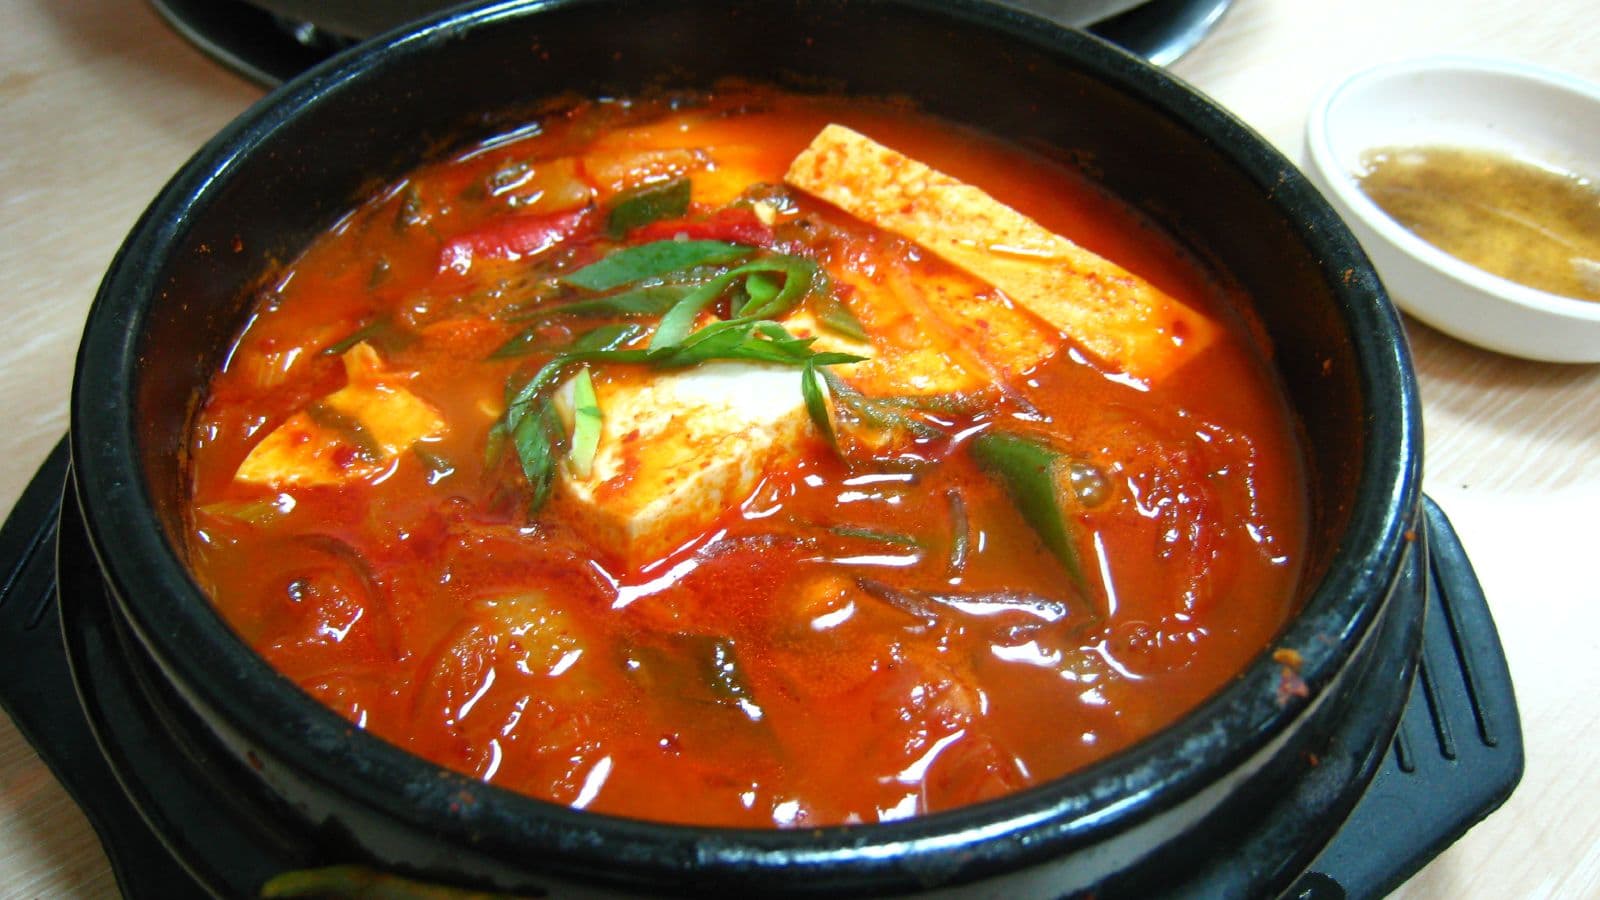 Kimchi soup, one of Korea’s most popular delicacies